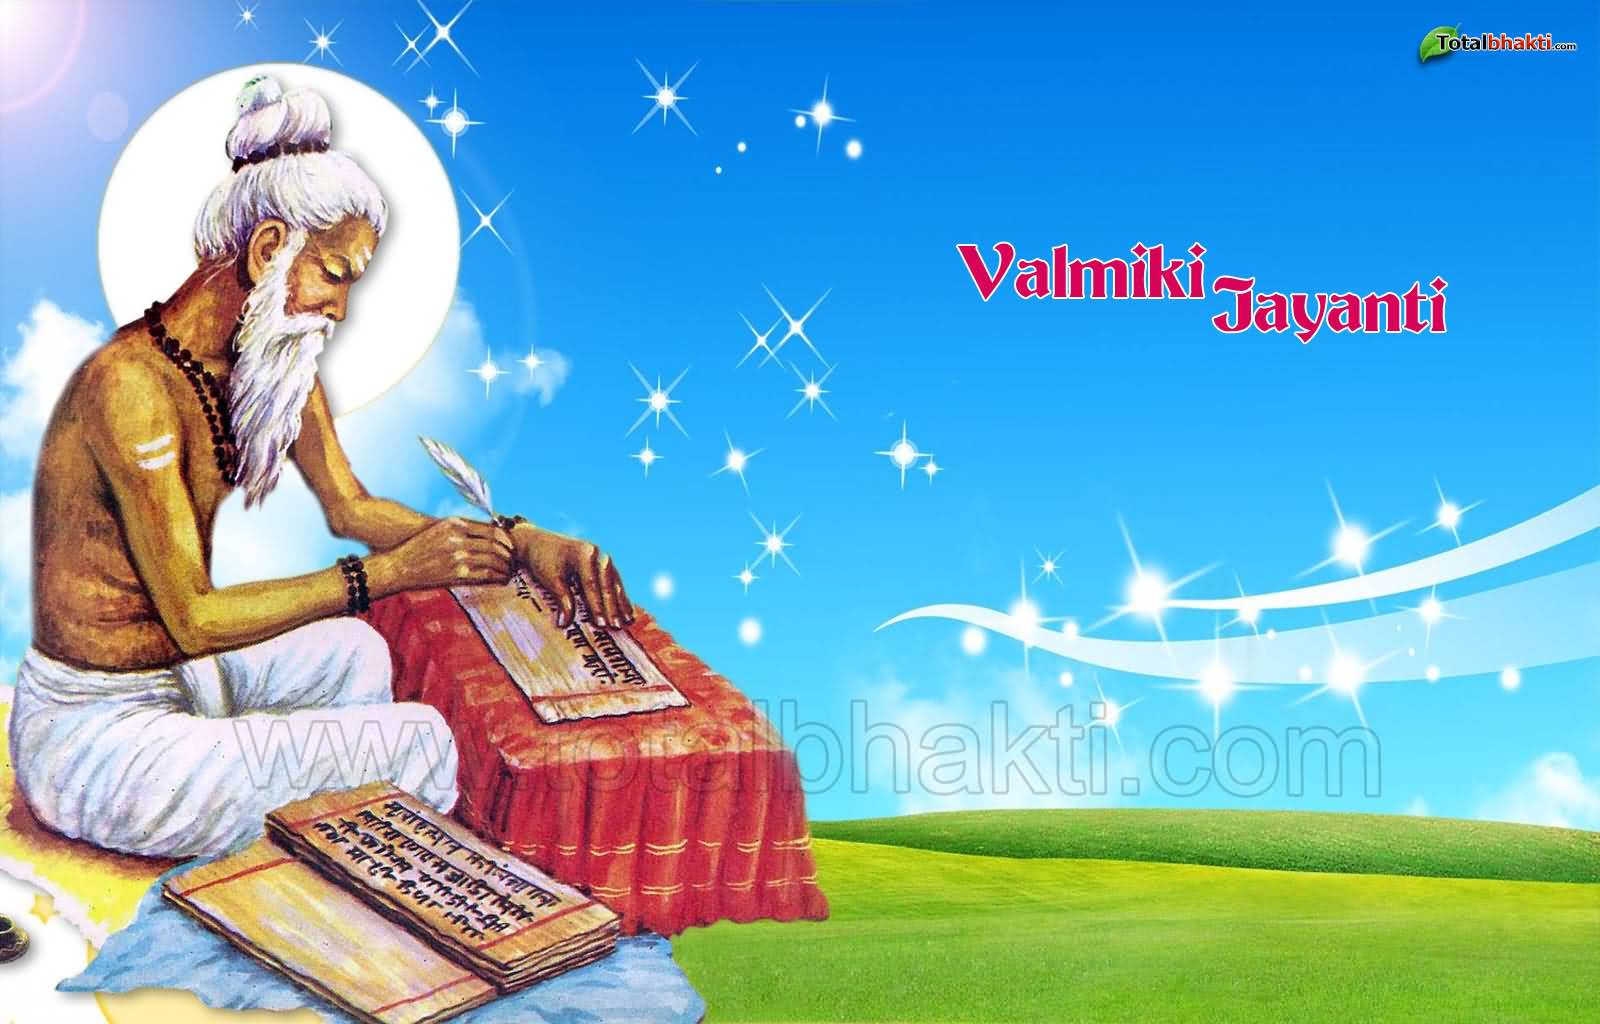 Wish You Happy Valmiki Jayanti 2016 Wallpaper